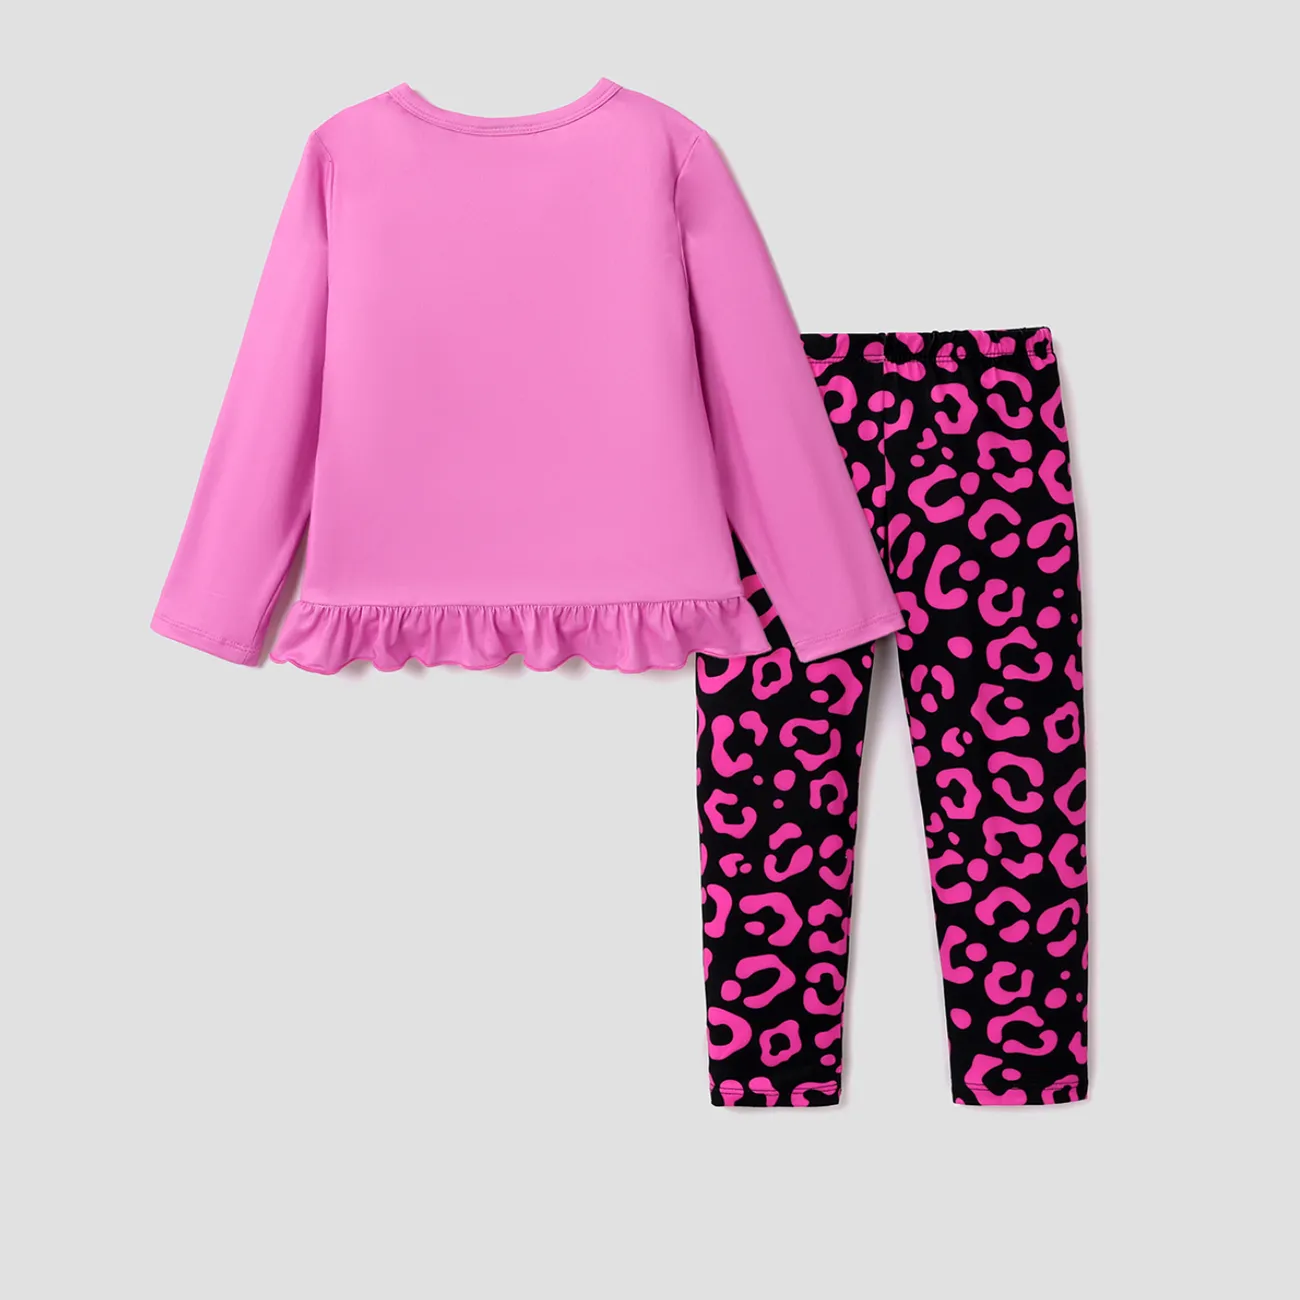 L.O.L. SURPRISE! 2pcs Toddler Girl Character Print Tee and Polka Dots Leggings Set Pink big image 1